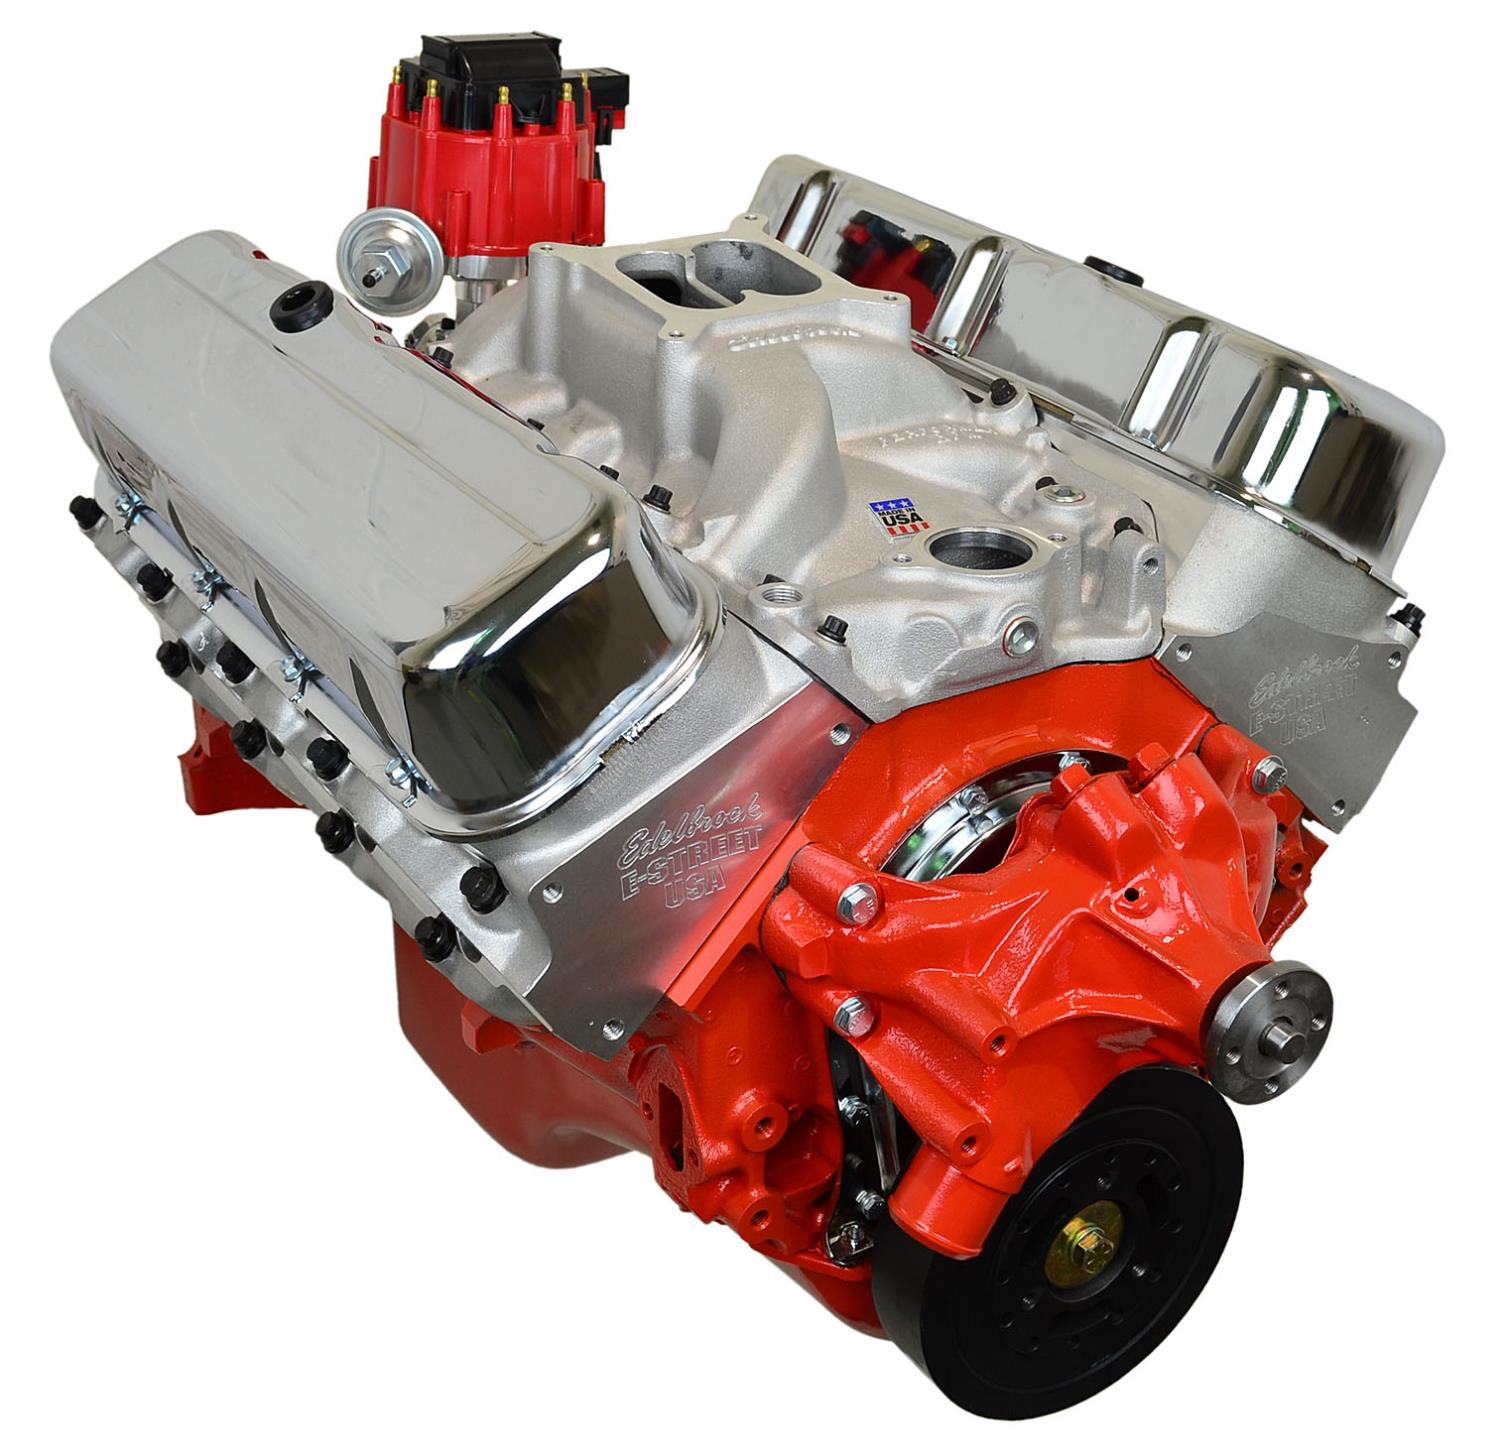 HP451PM High Performance Crate Engine Big Block Chevy 454ci / 525HP / 550TQ